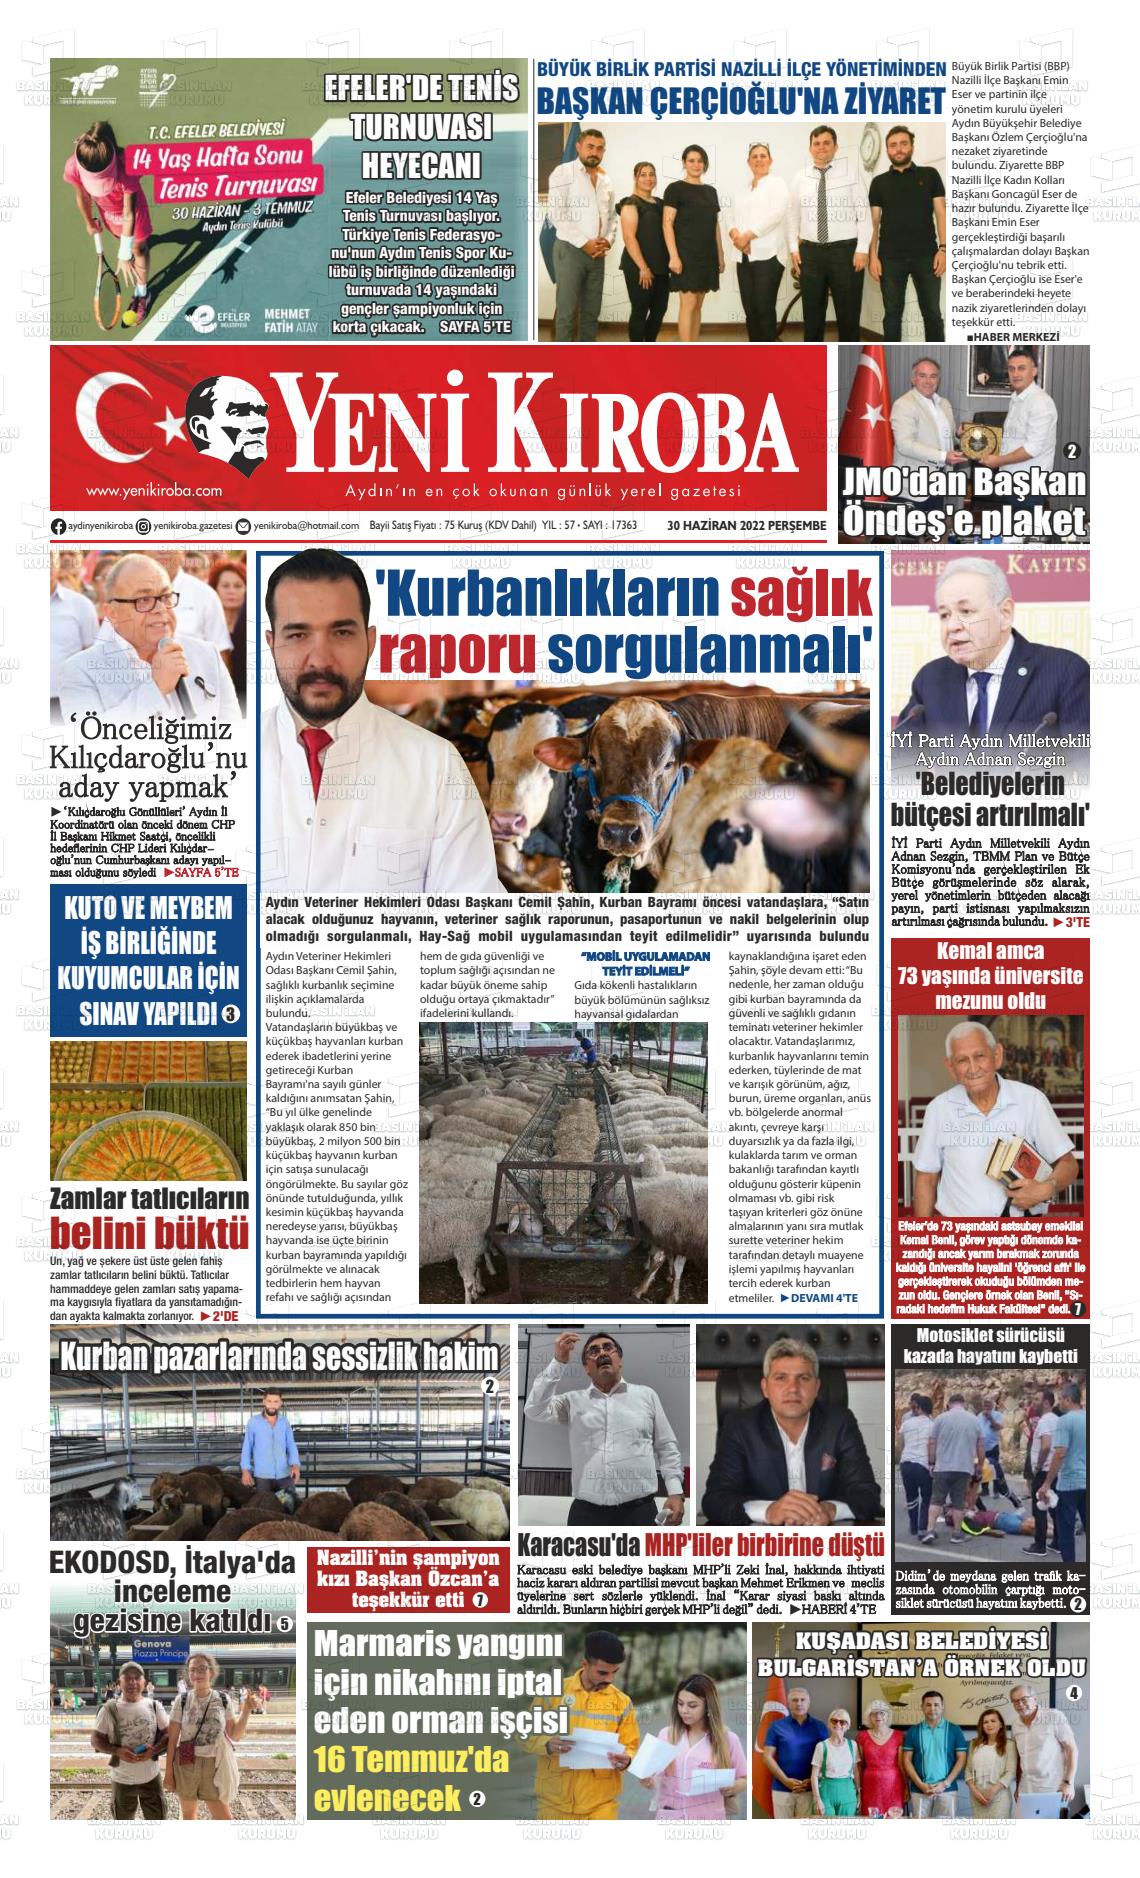 30 Haziran 2022 Yeni Kıroba Gazete Manşeti